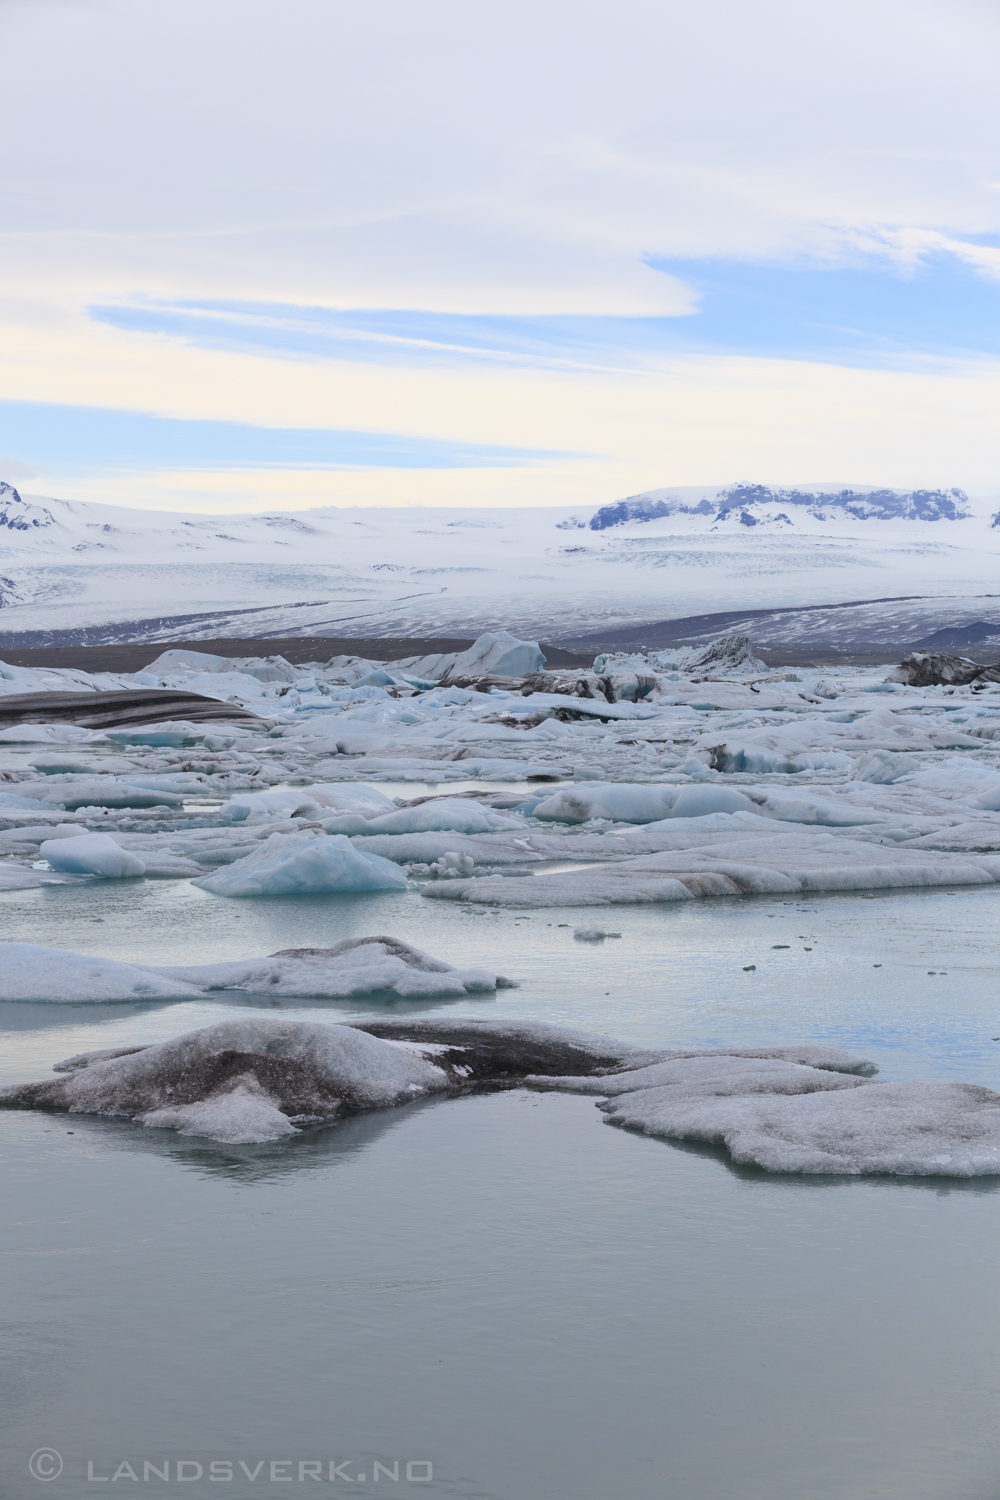 Jökulsárlón glacier lagoon. 

(Canon EOS 5D Mark II / Canon EF 70-200mm f/2.8 L IS II USM)